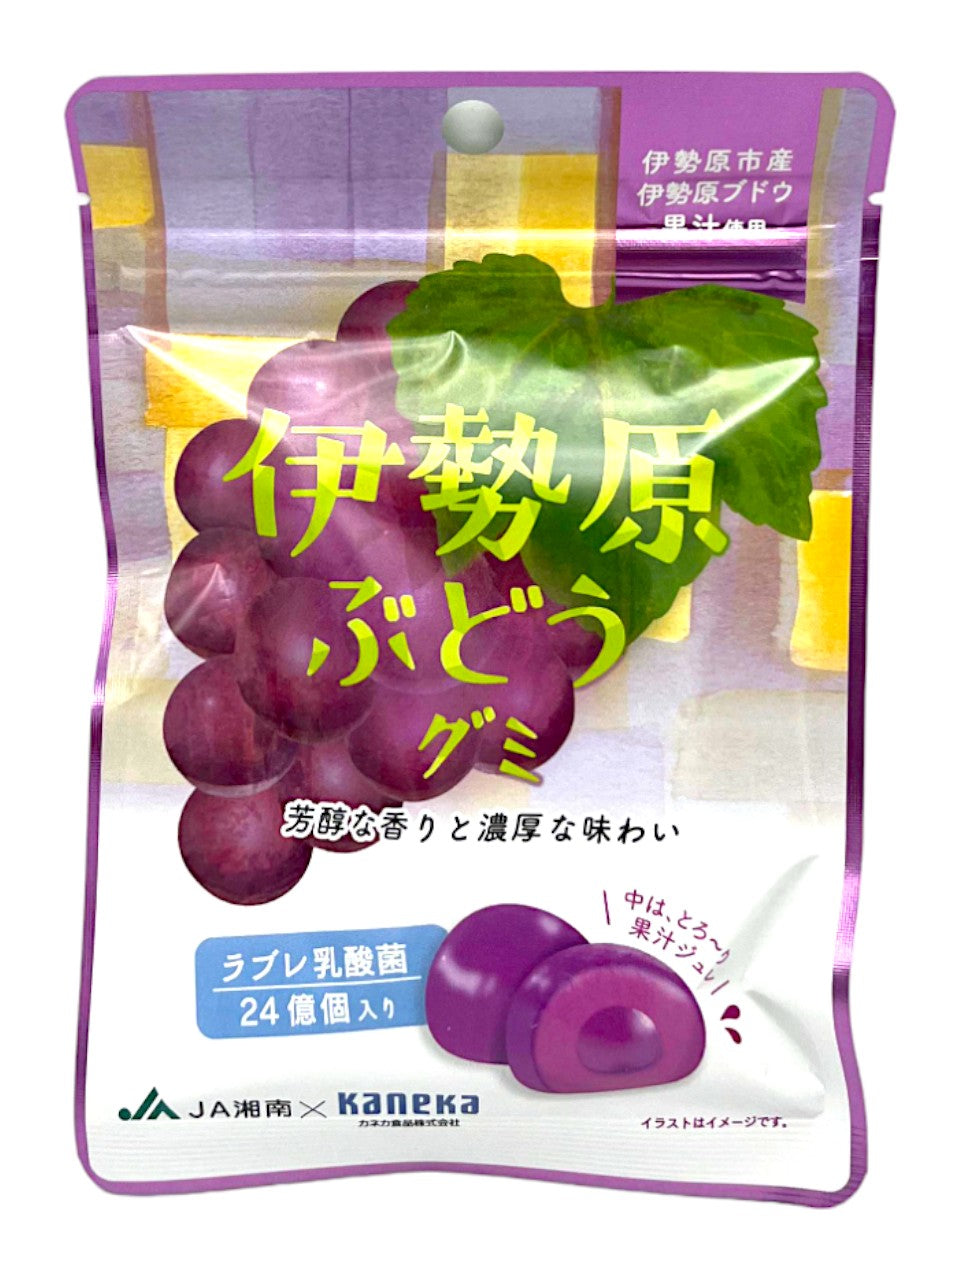 Kaneka Isehara Grape Gummy pack of 10 (Japan)